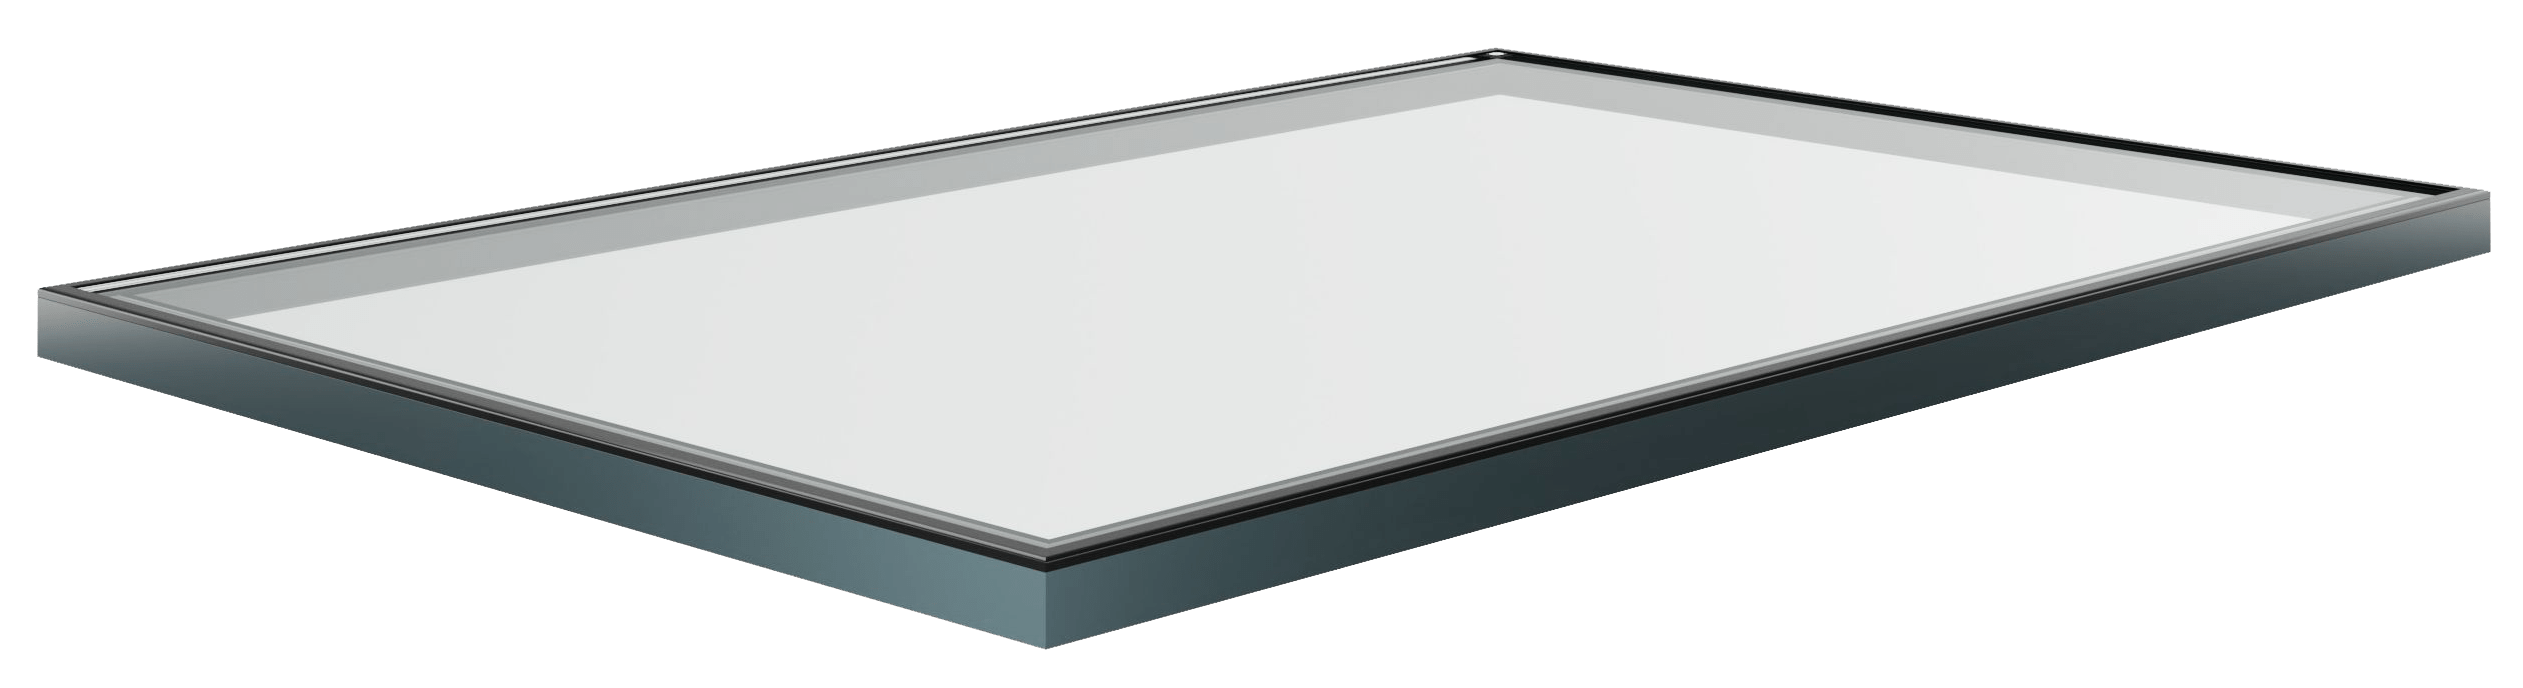 Korniche Flat Glass Rooflight - Clear Glass